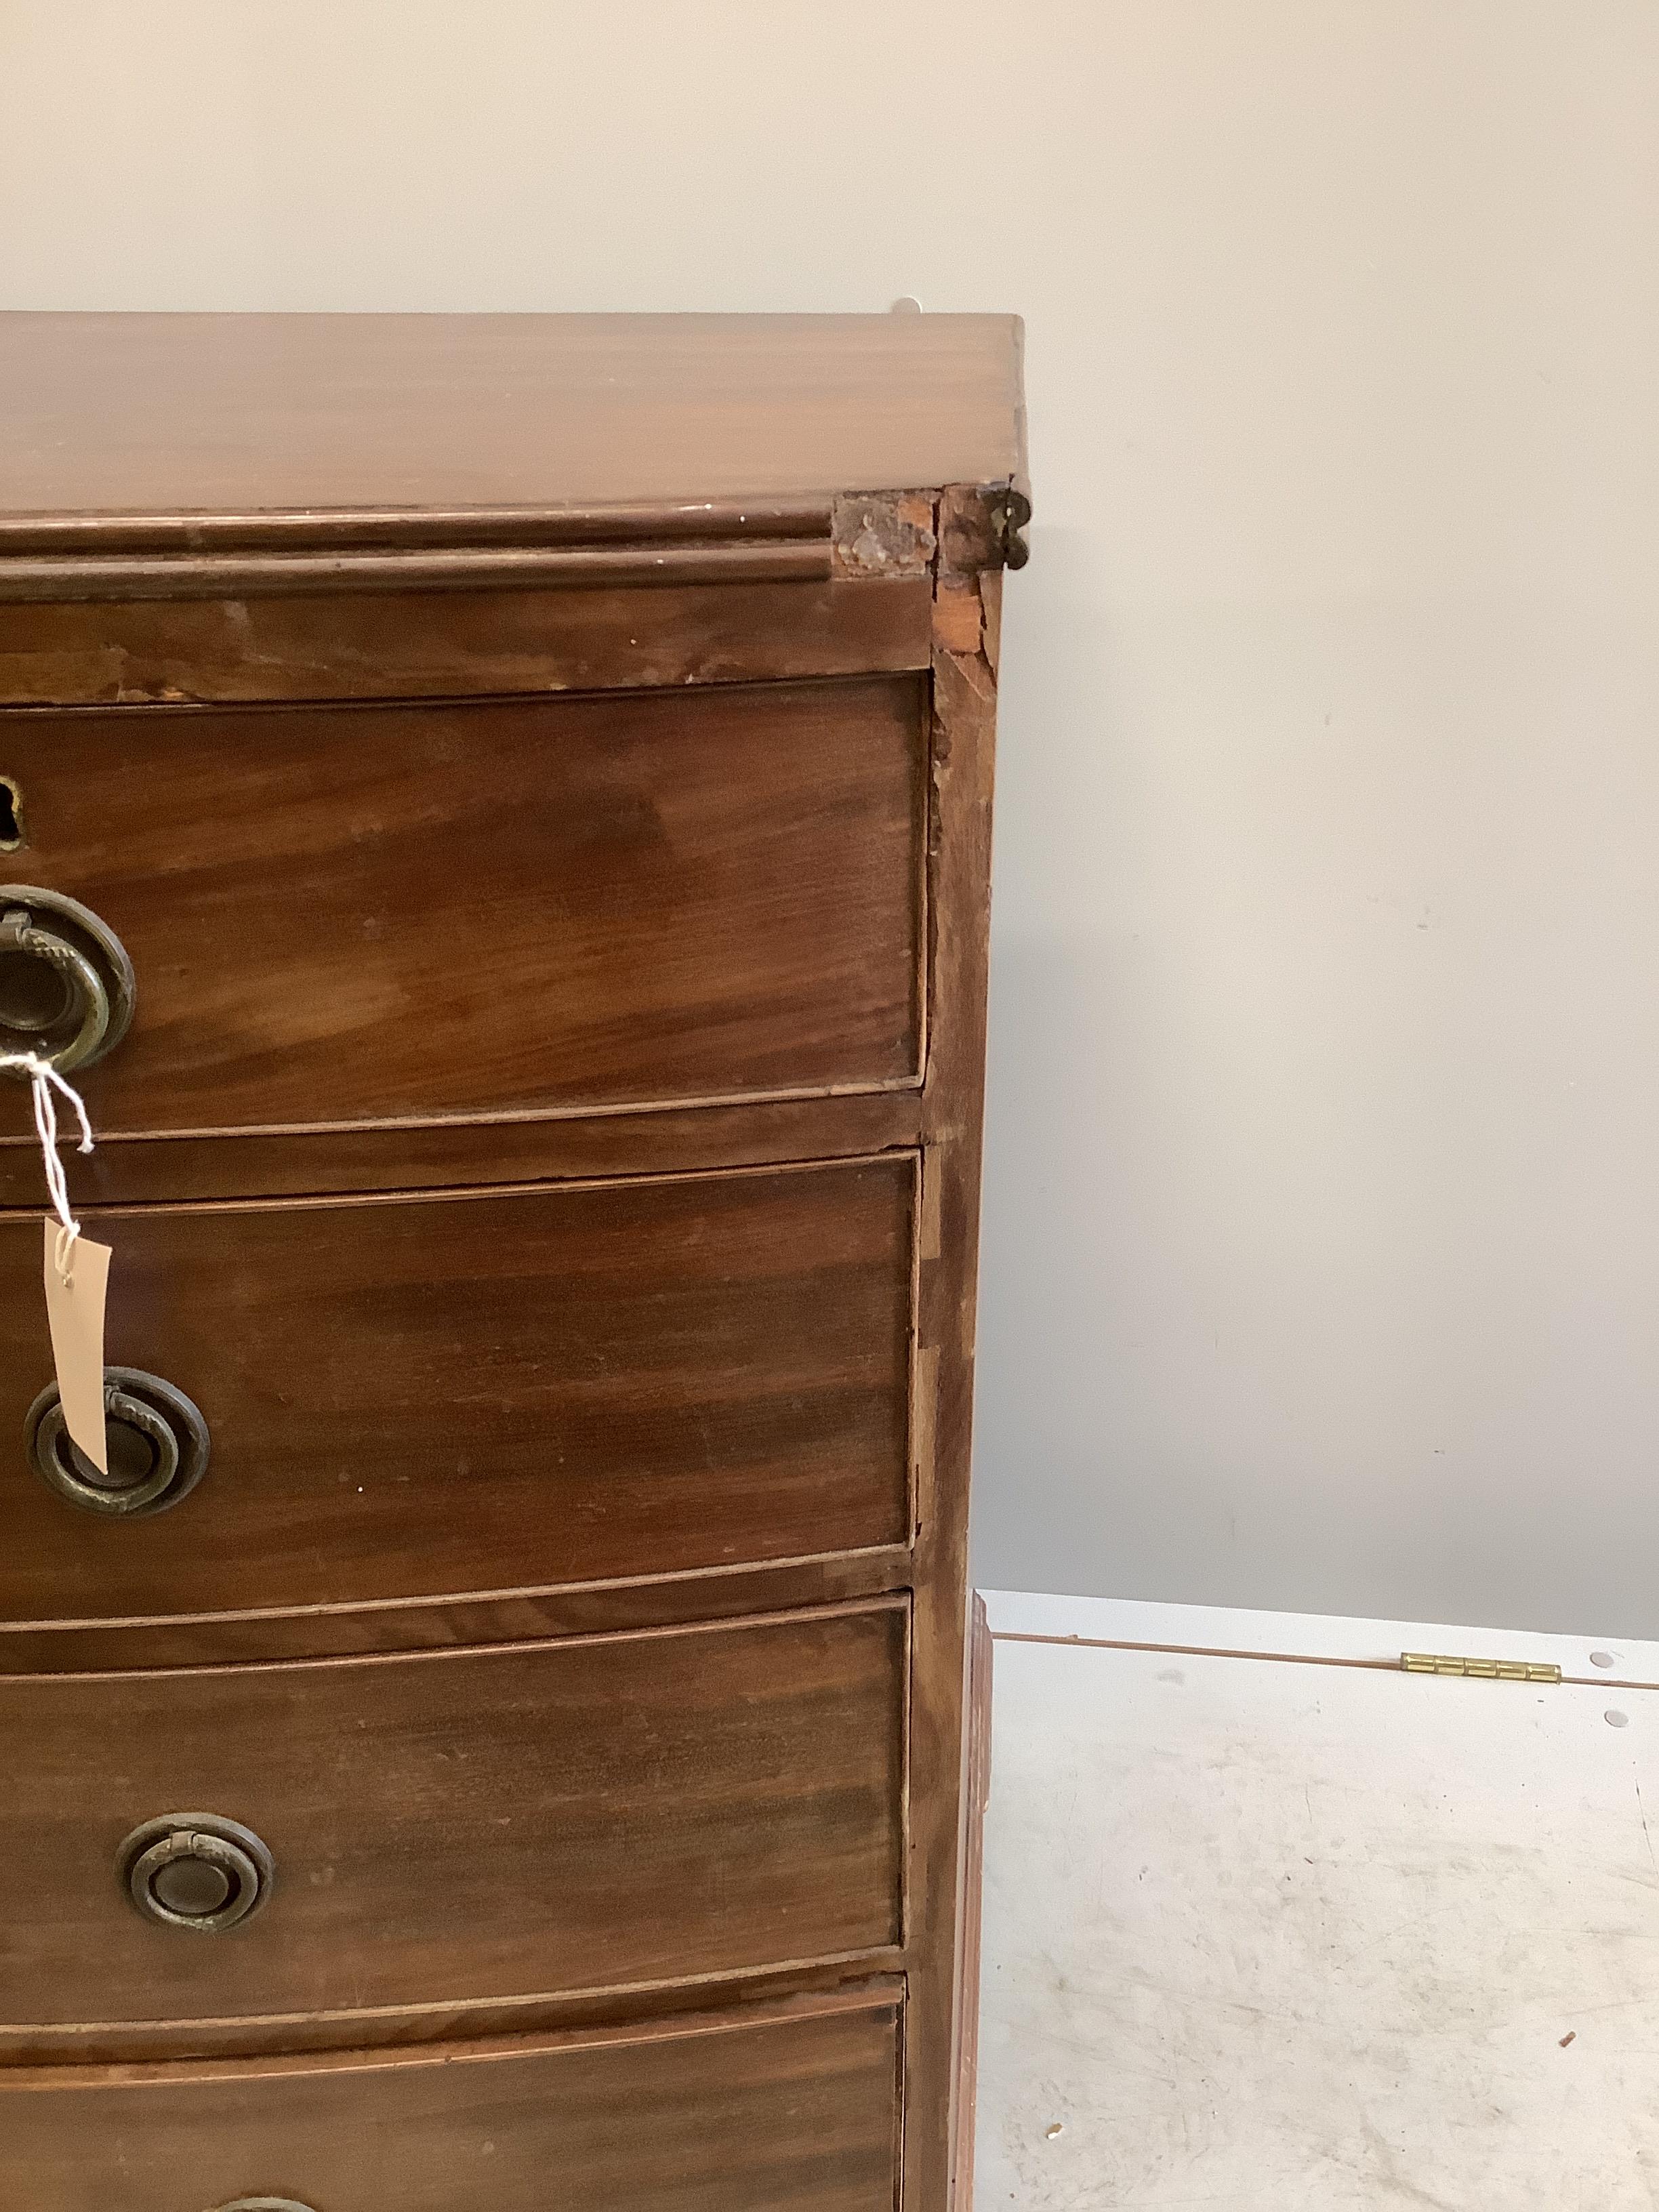 A Regency mahogany bowfront chest, width 106cm, depth 57cm, height 90cm